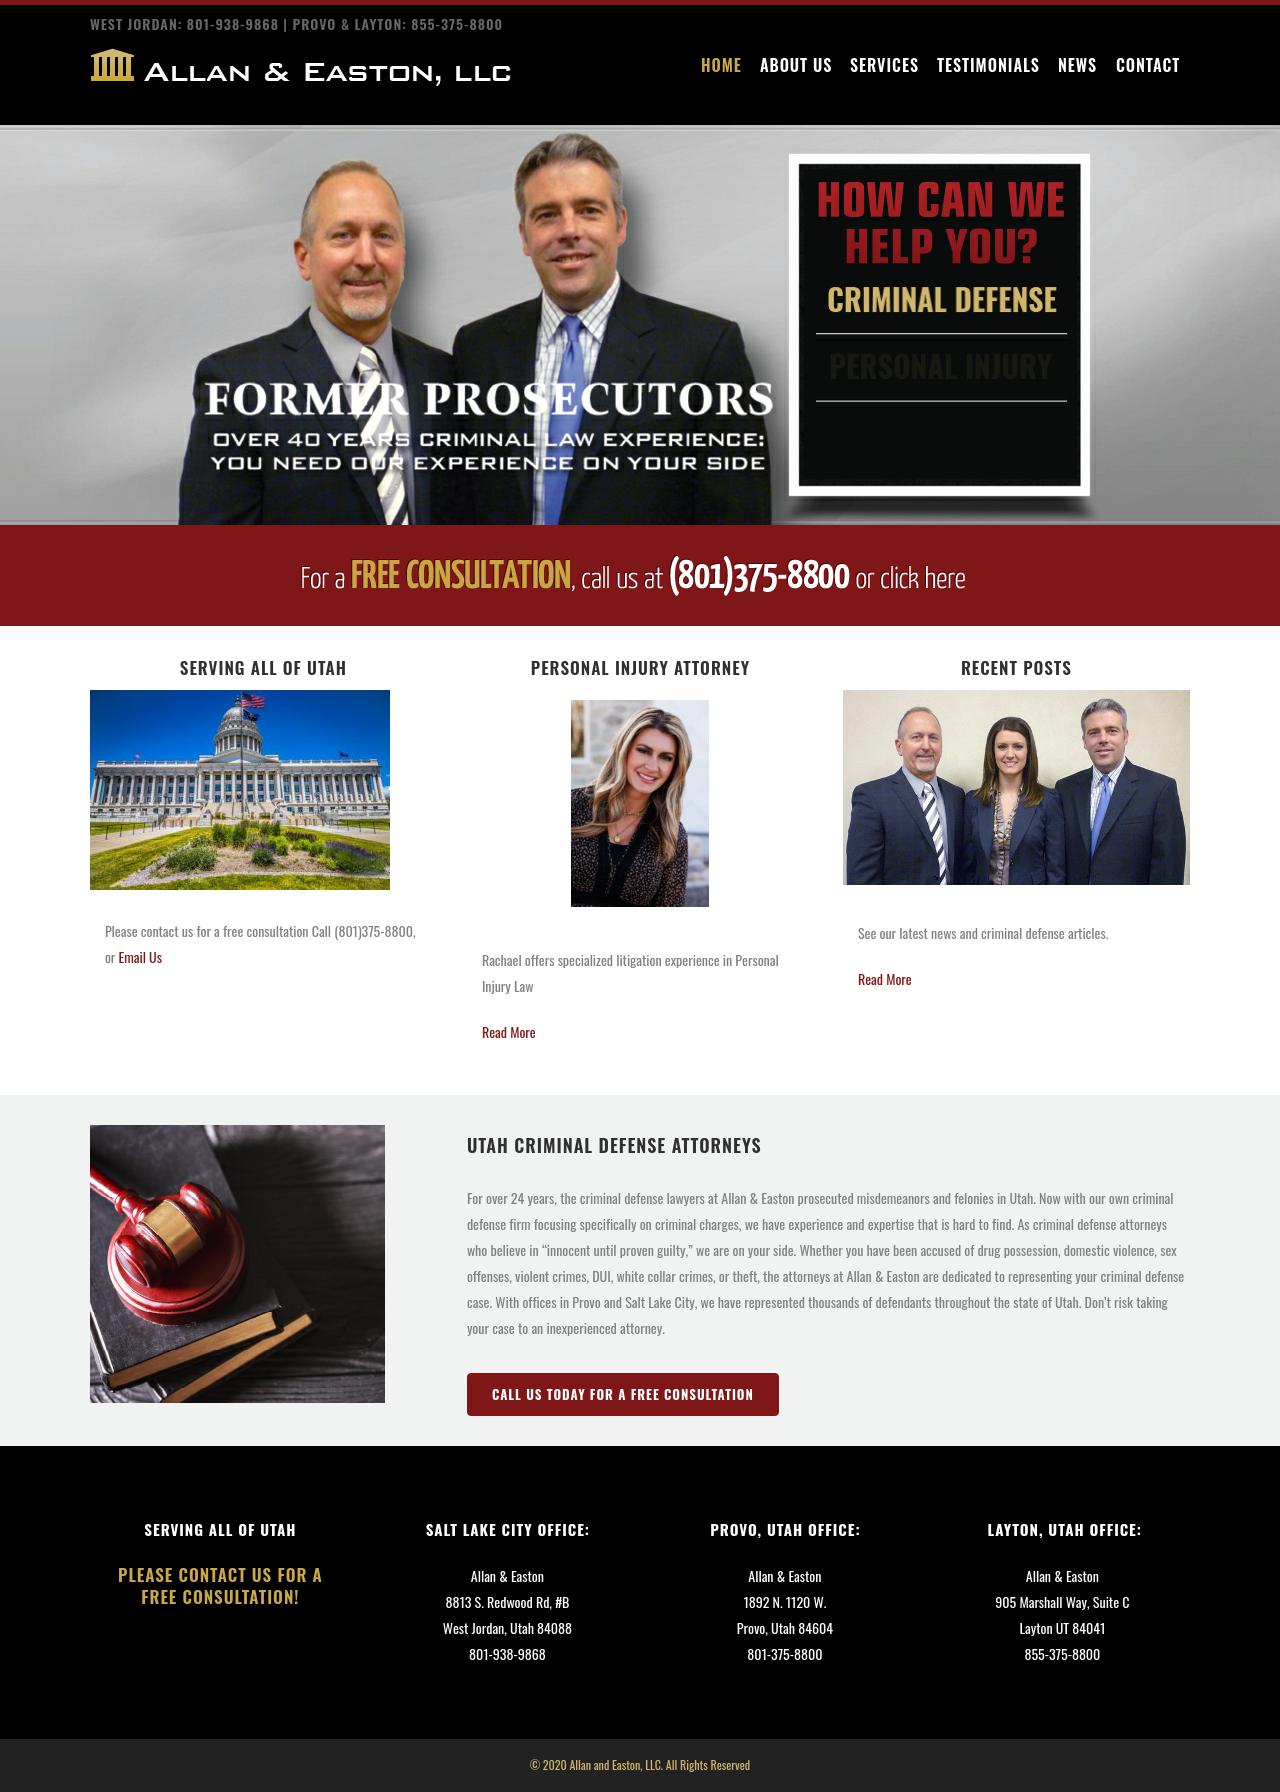 Allan & Easton LLC - Provo UT Lawyers